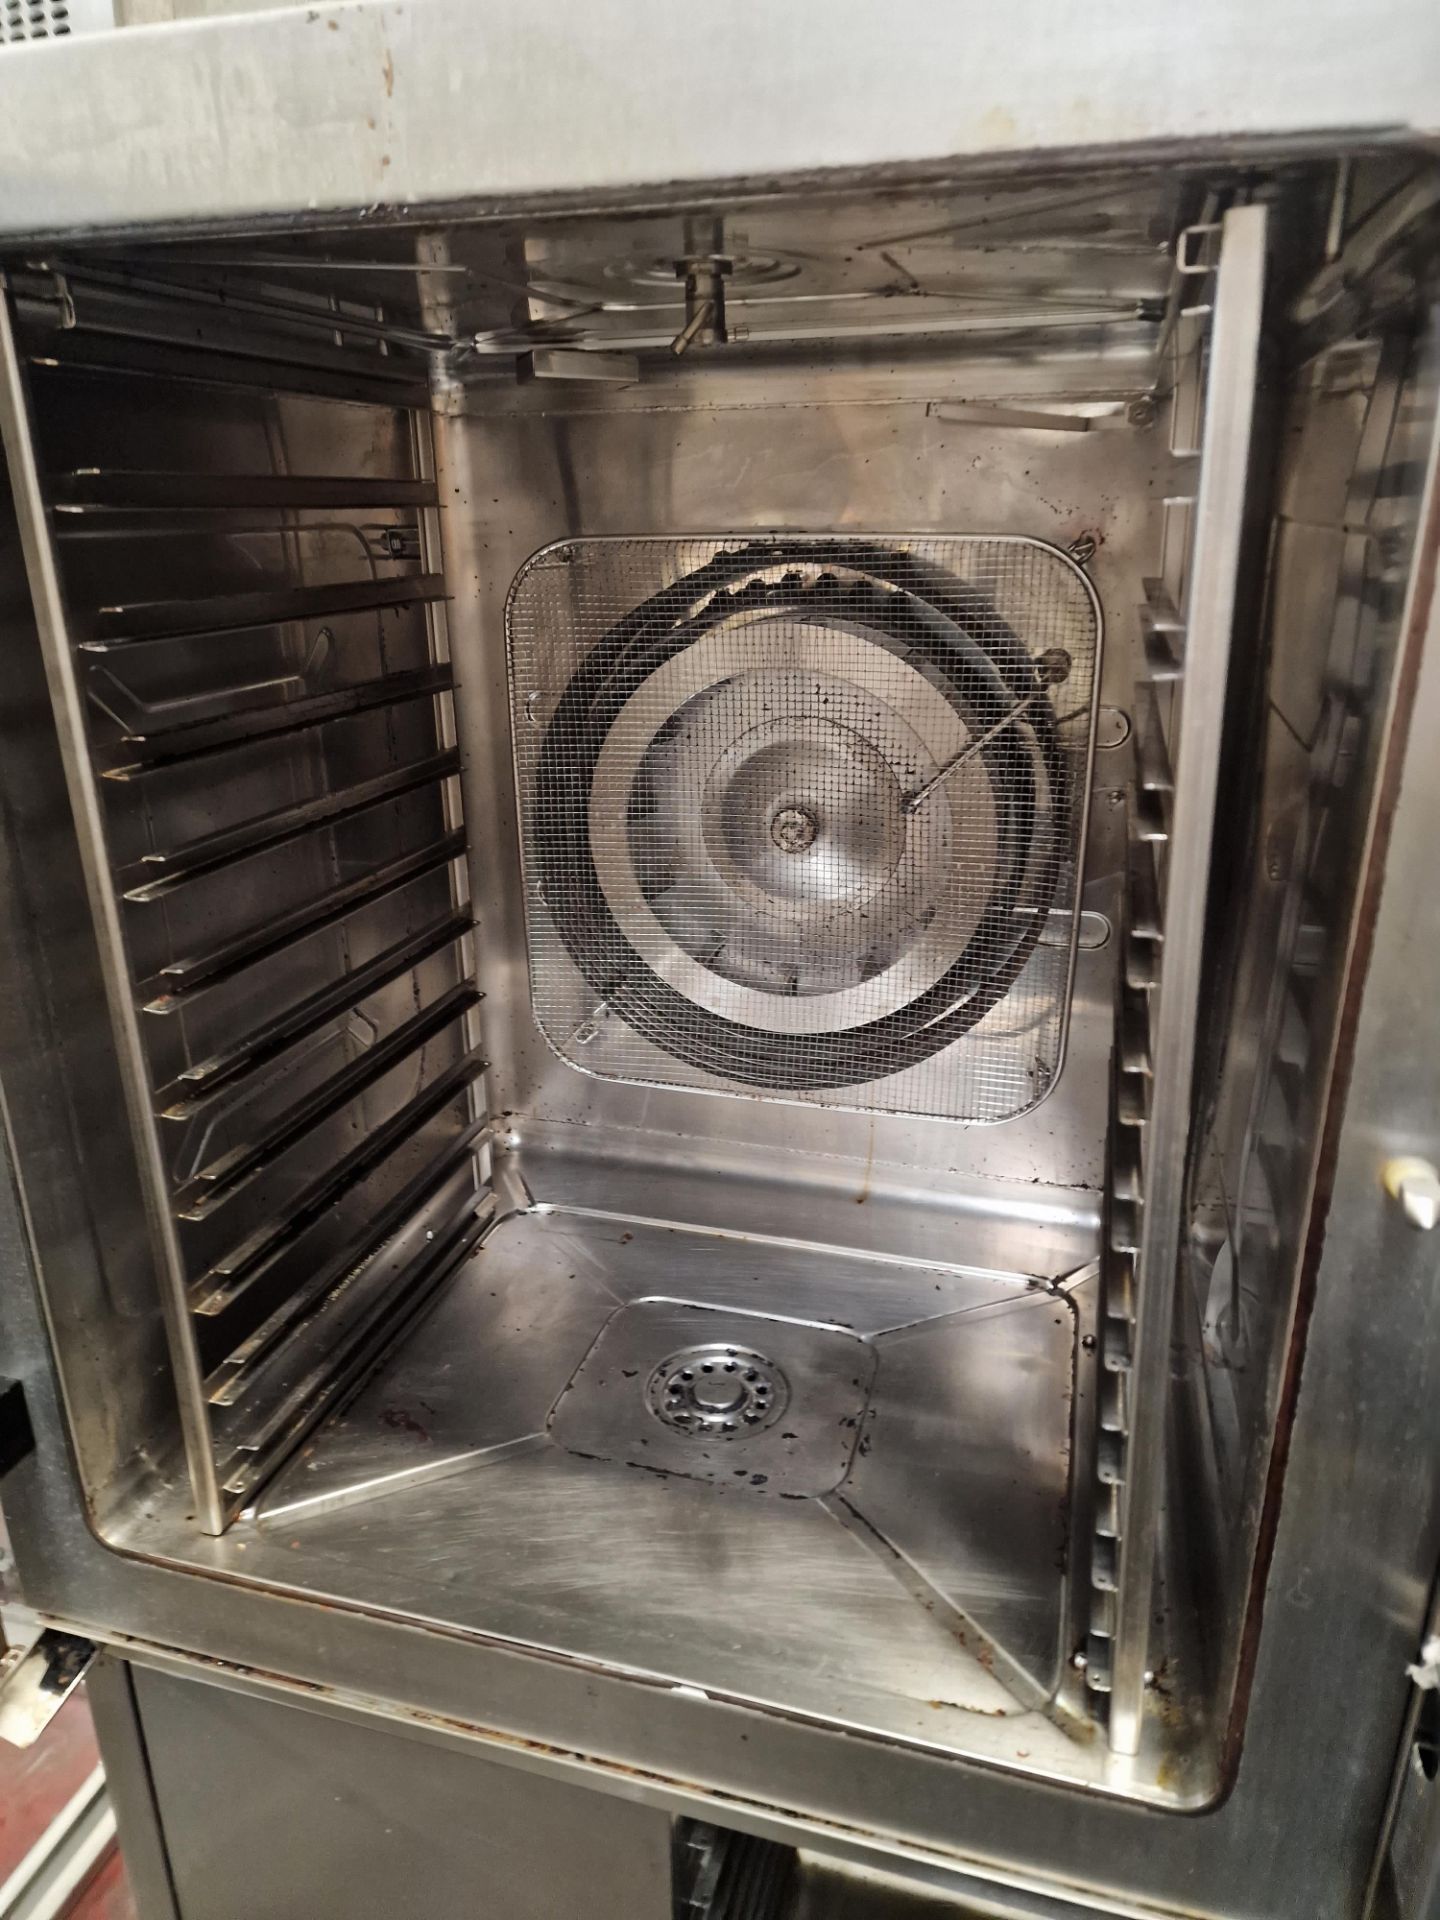 Hobart model CPLUS-101G-LA-KK 10 grid combi oven on stainless steel stand 3 phase sn K.81.853.716 - Image 3 of 5